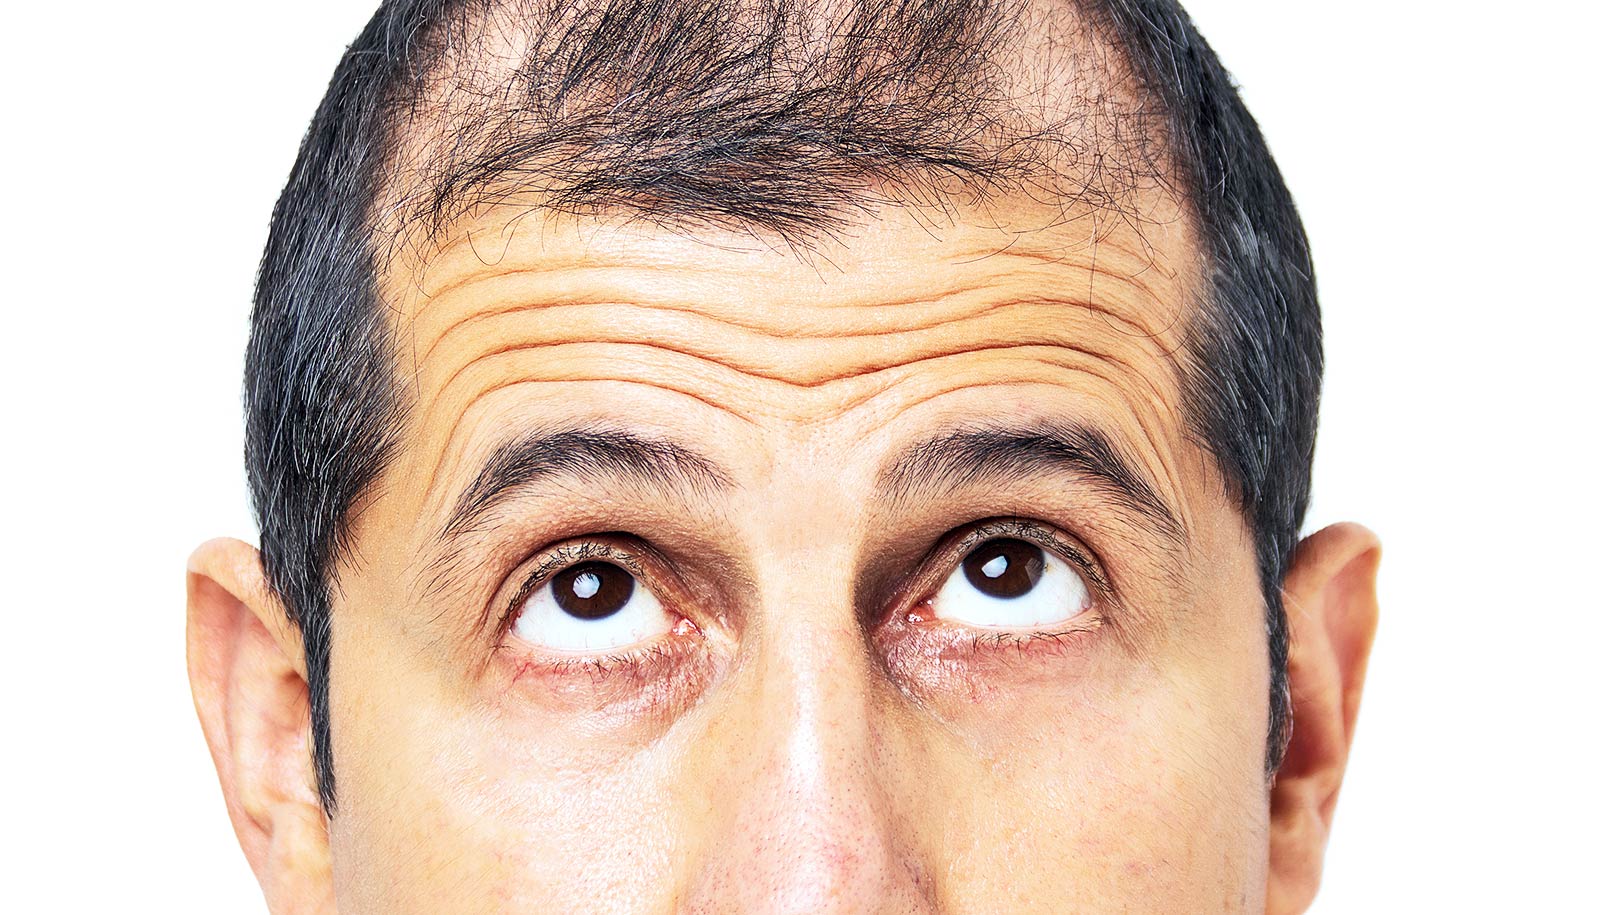 SCUBE3 molecule may cause hair loss to grow again